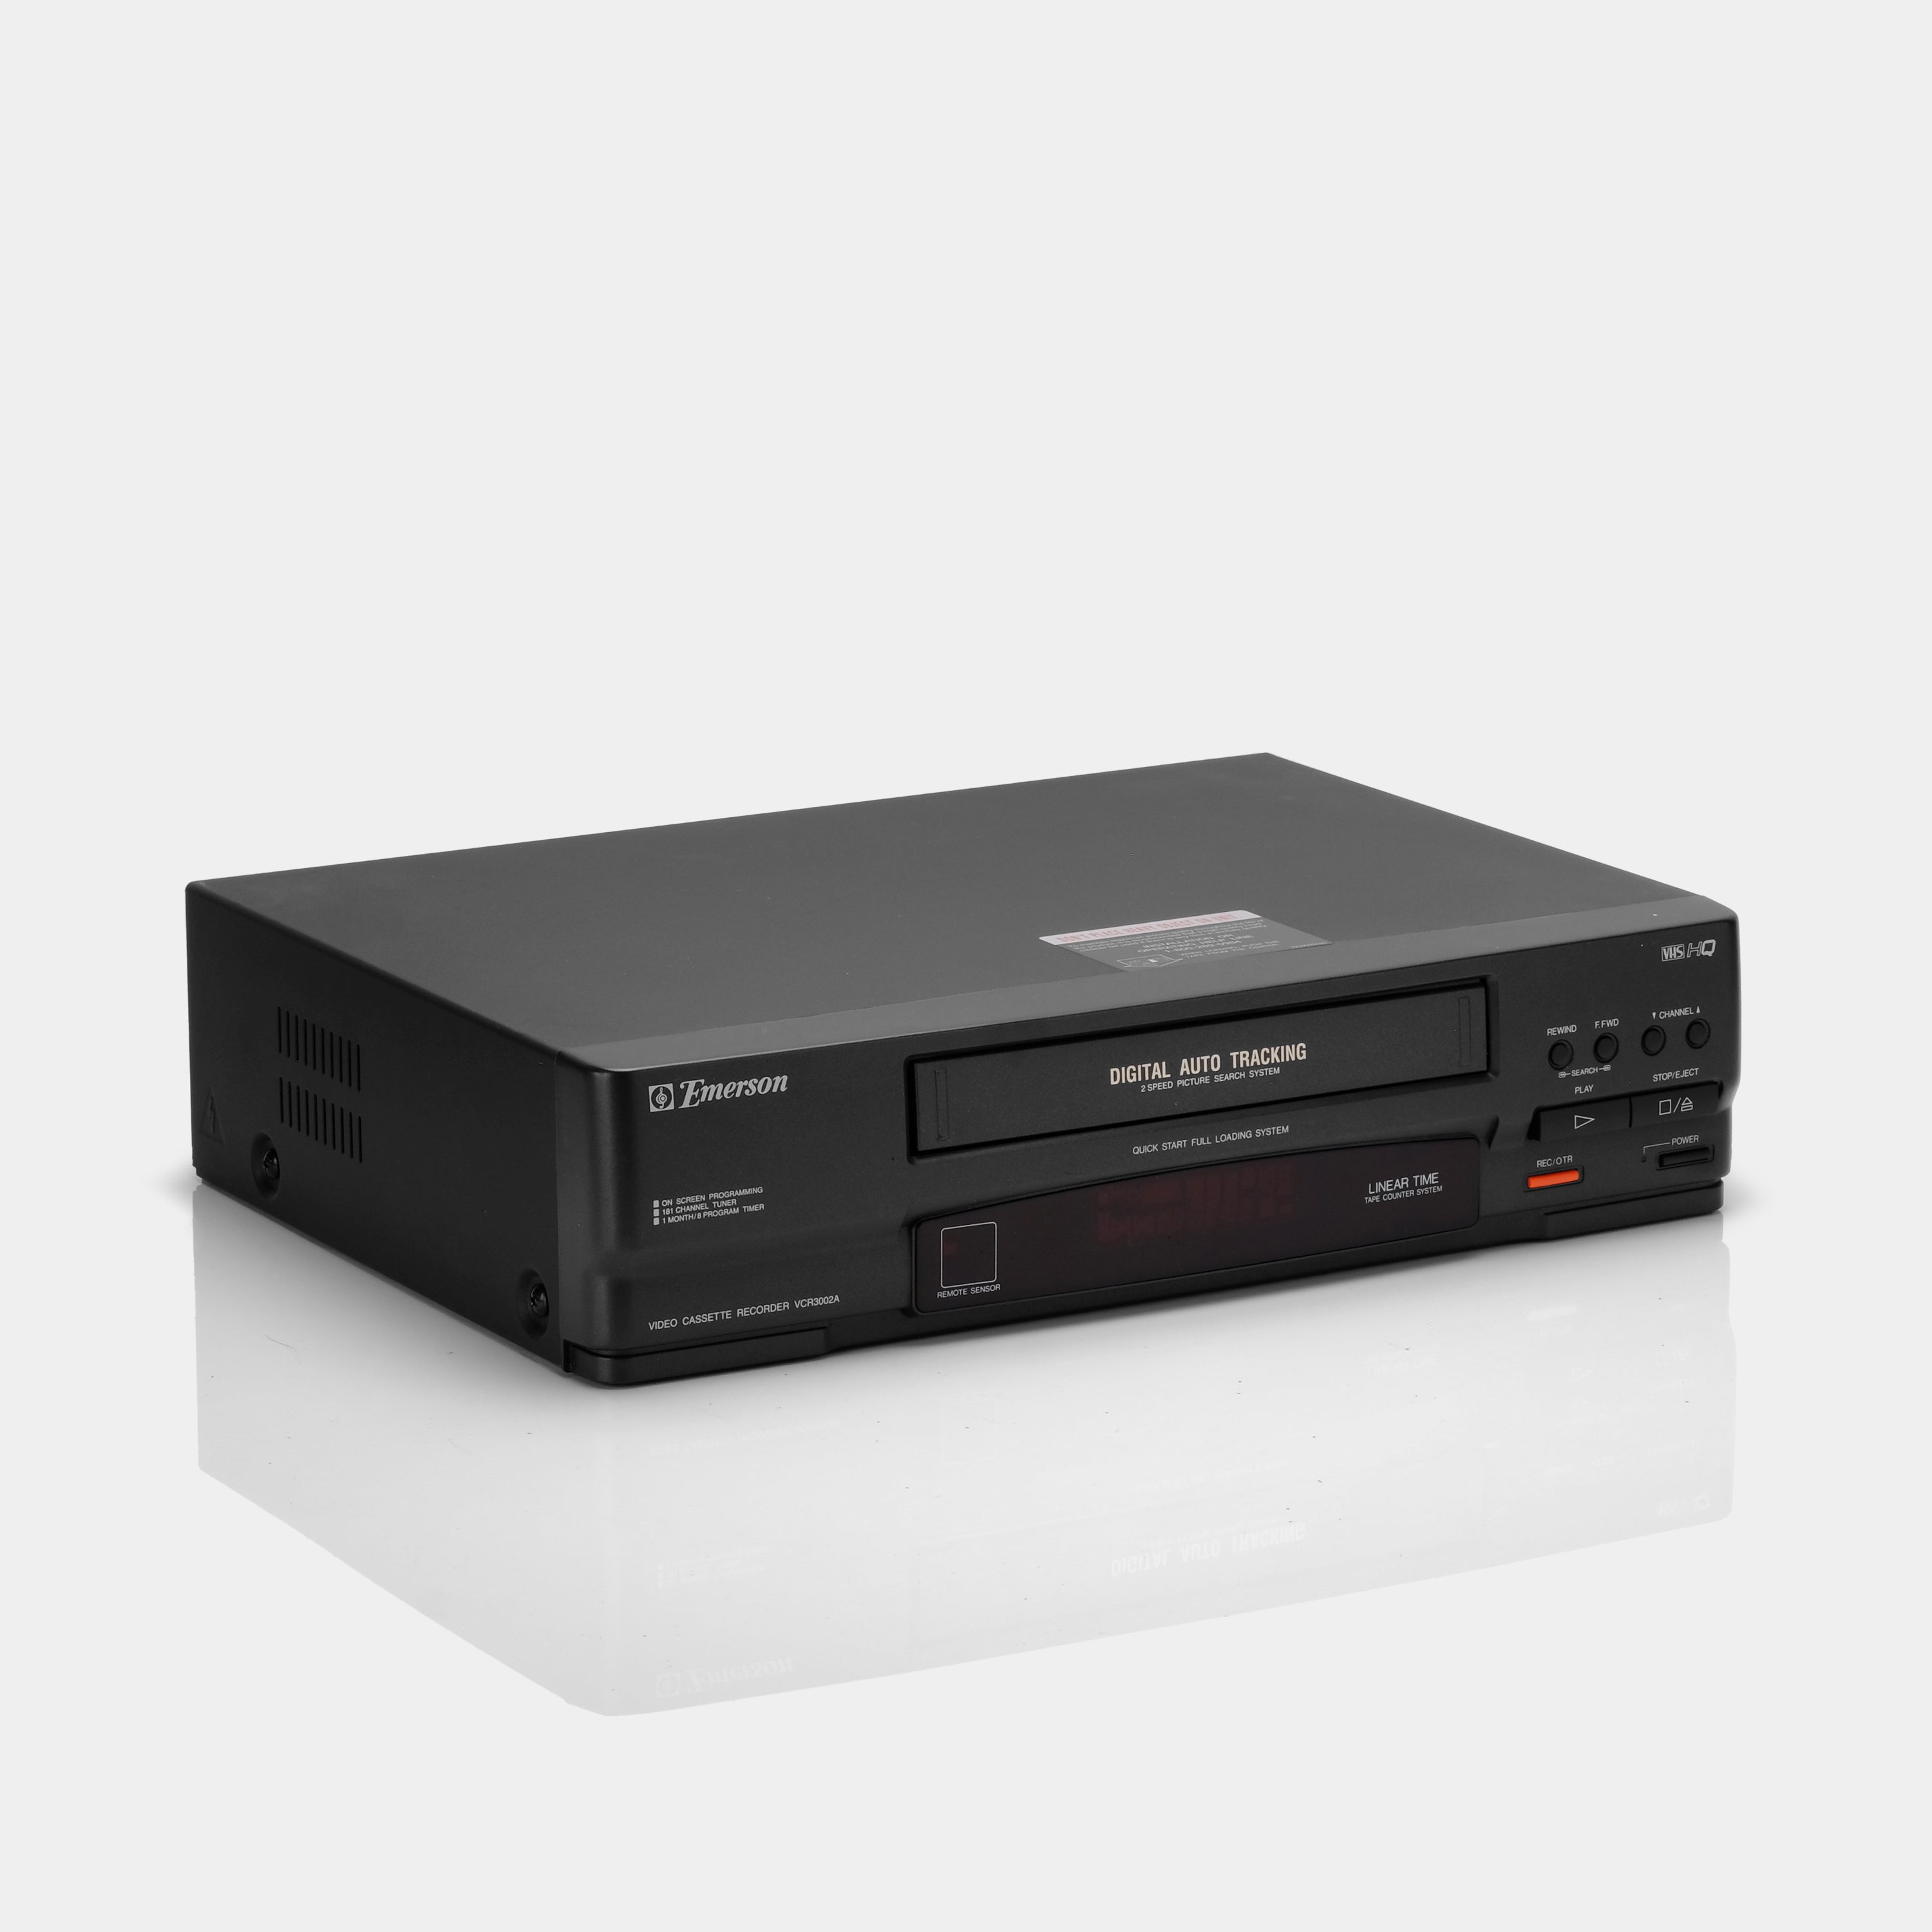 Emerson VCR3002A VCR VHS Player